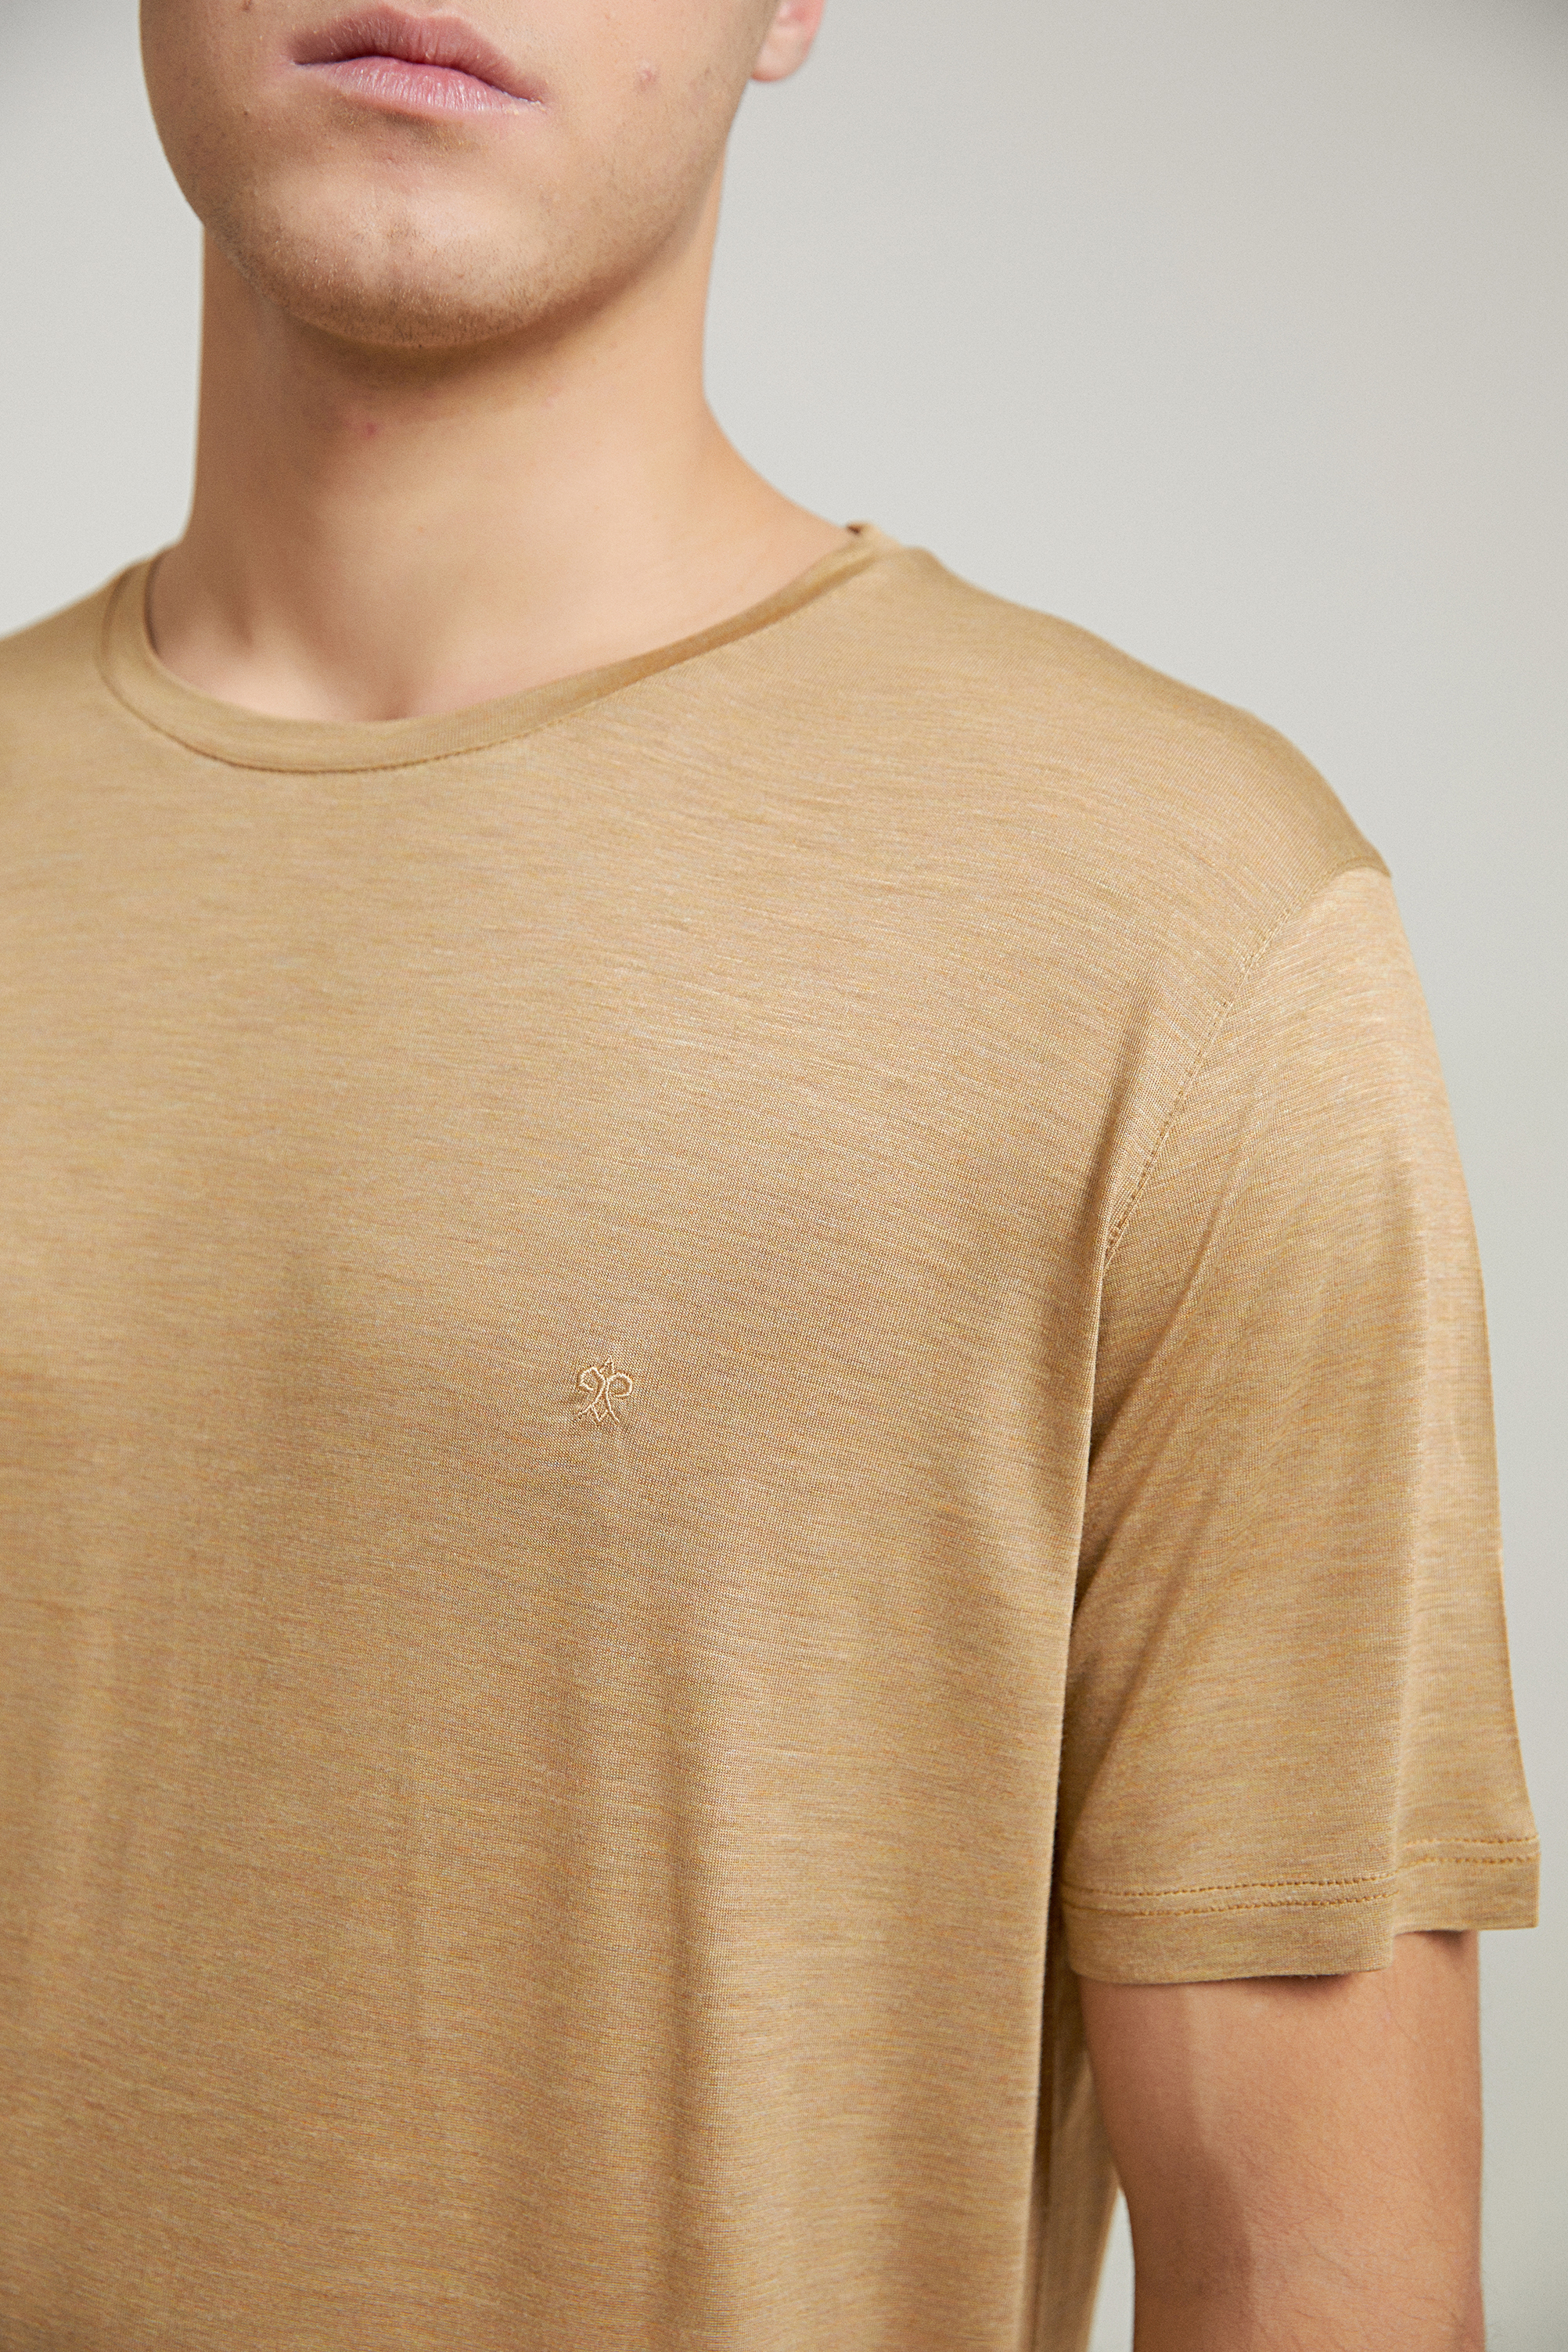 Damat Tween Damat Camel T-Shirt. 3